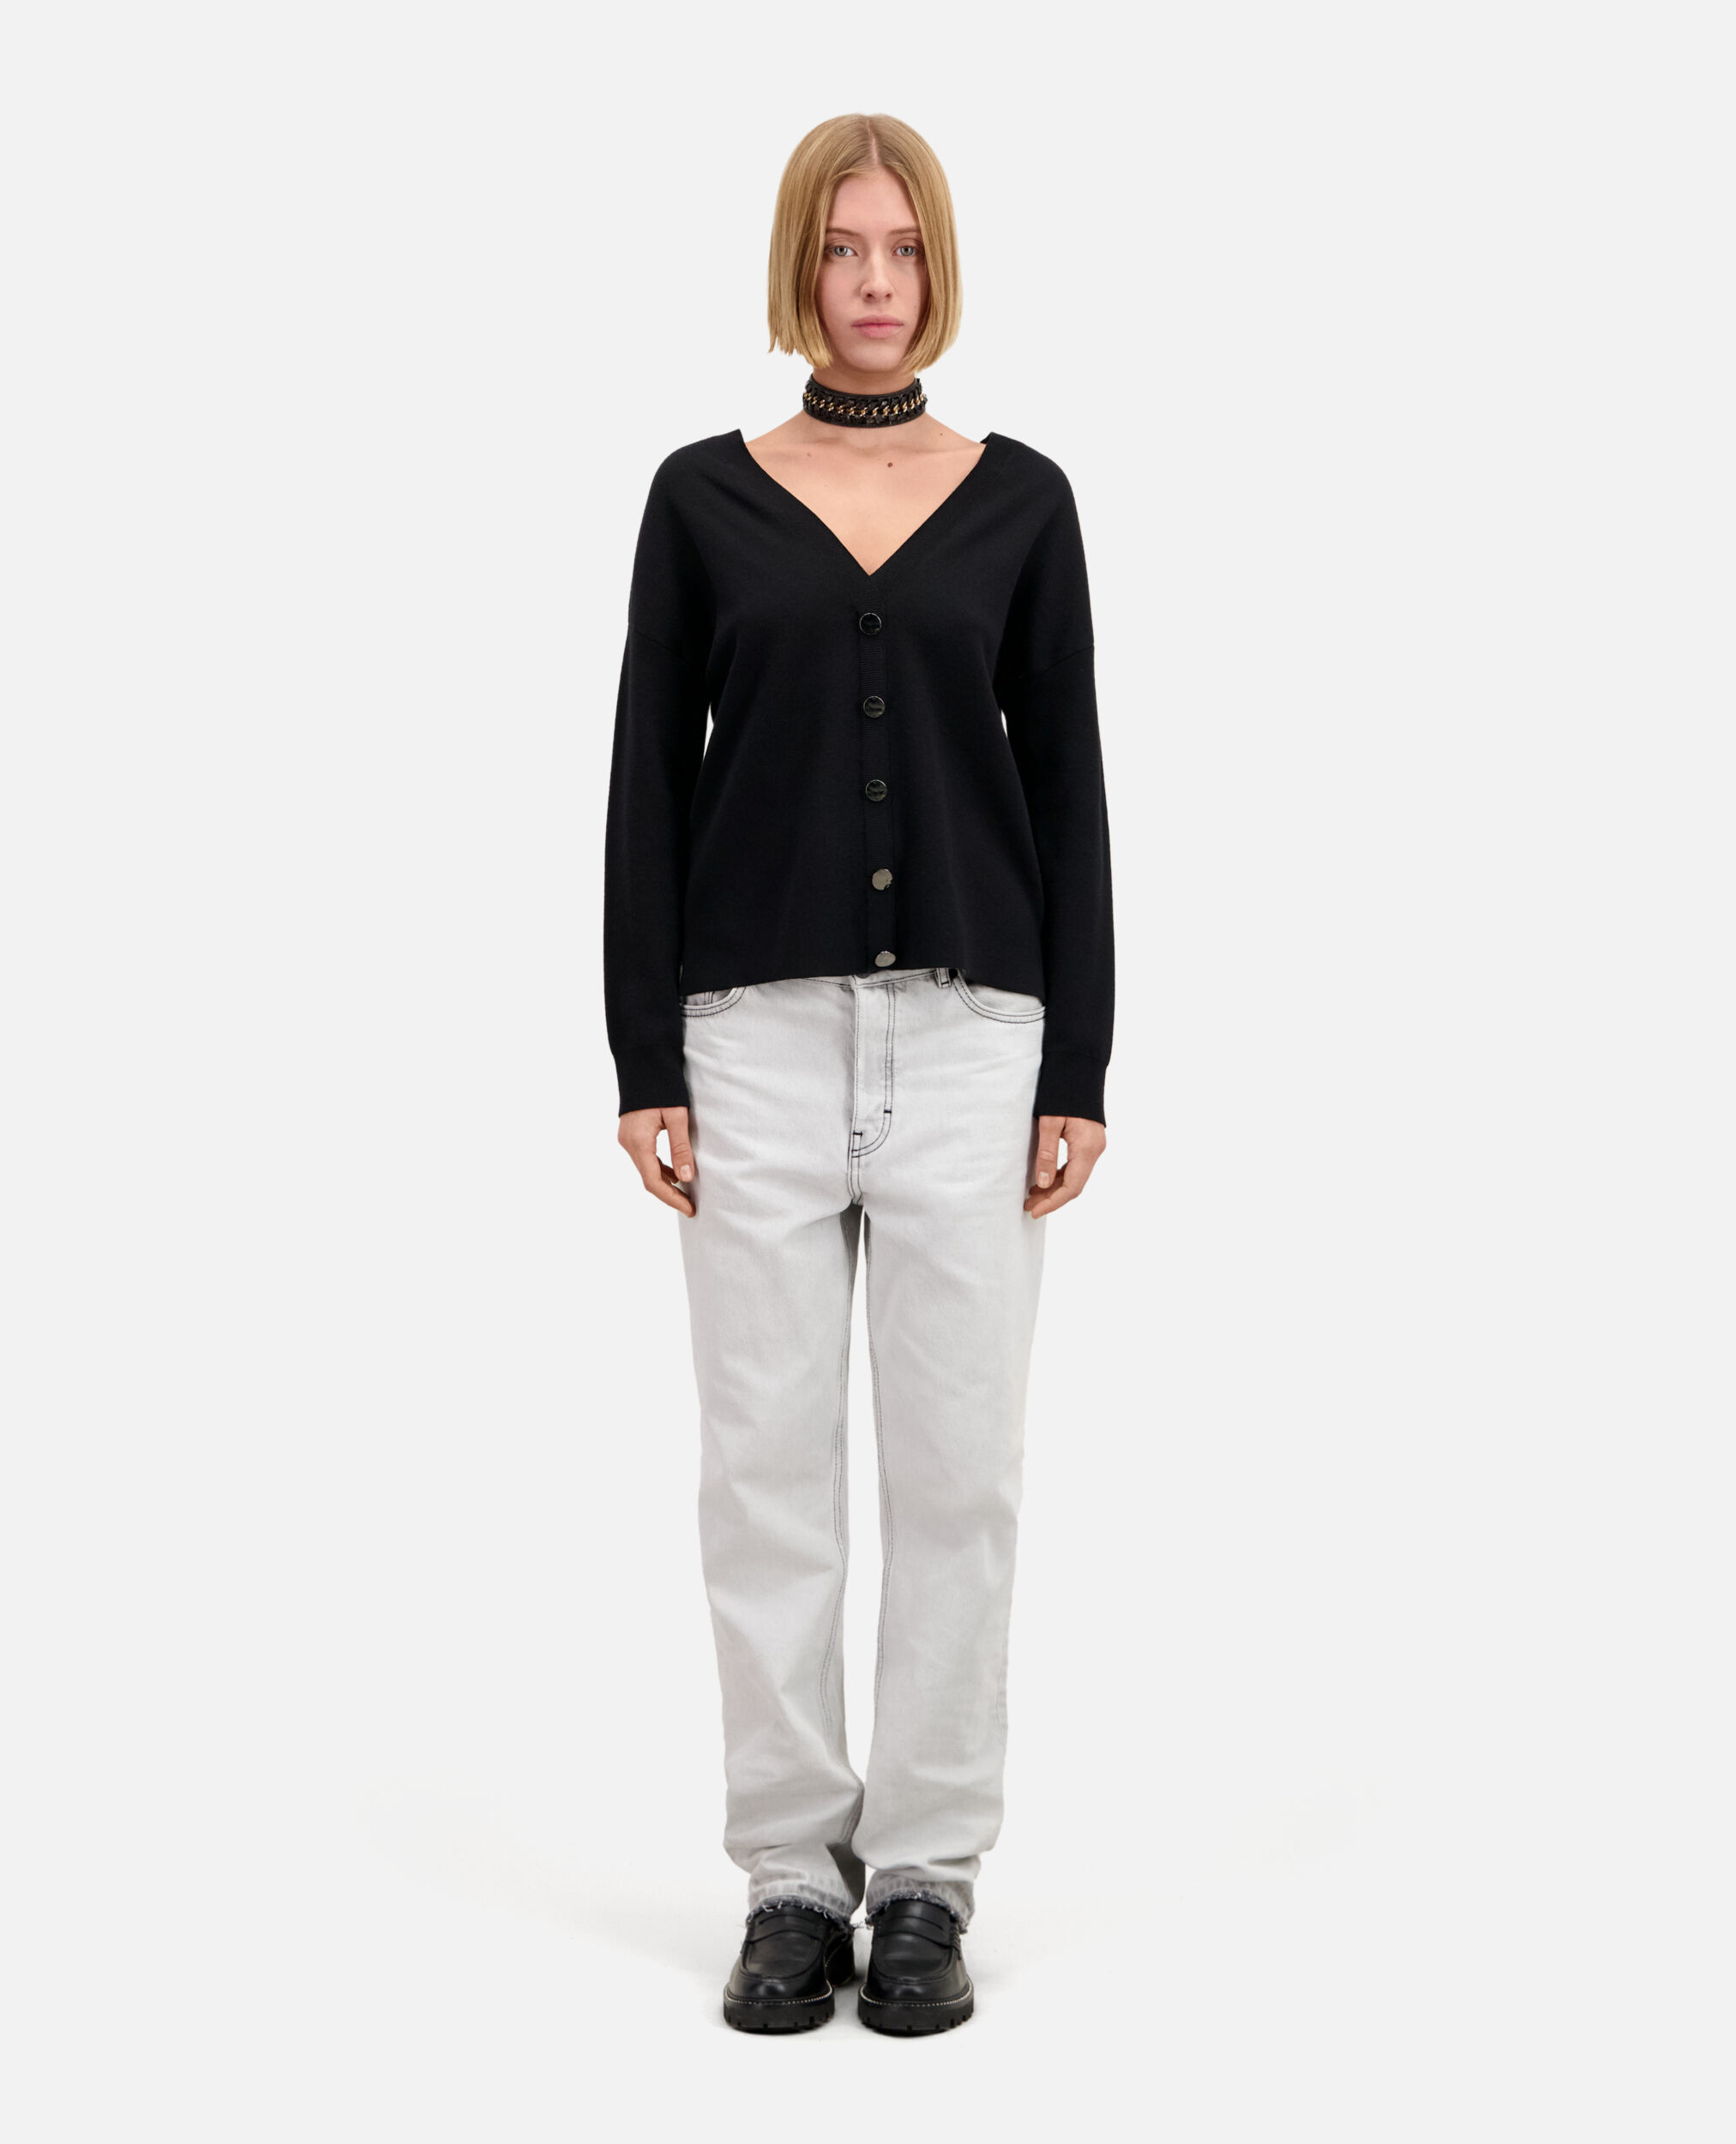 Pullover mit Knopfleiste am Rücken, BLACK, hi-res image number null